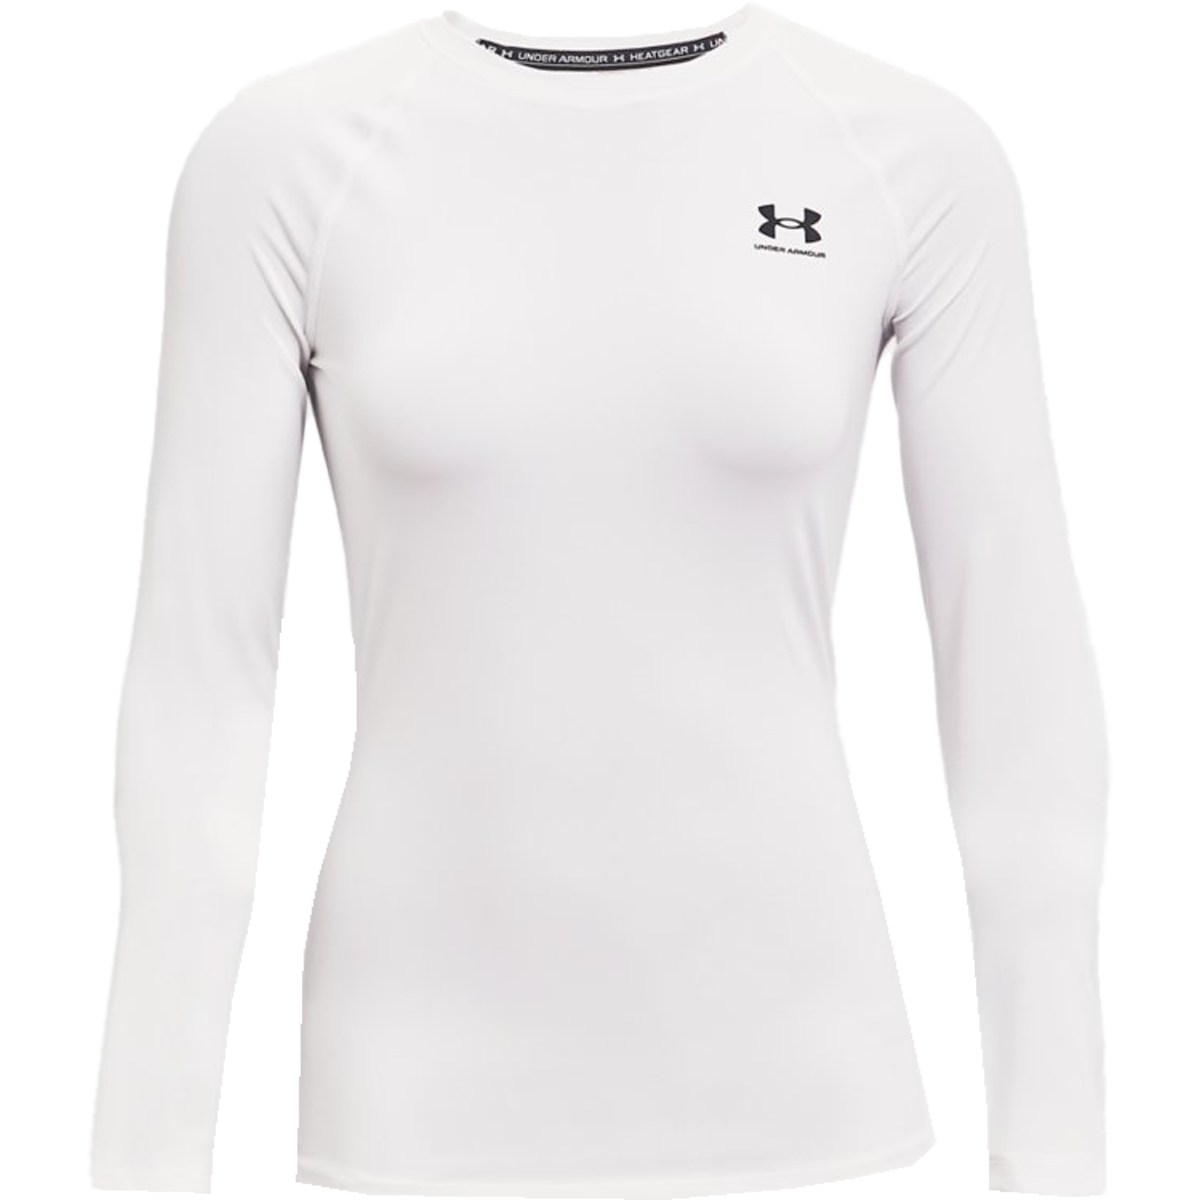 Under Armour Heatgear PERFORMANCE TEAM WOMEN'S POLO T-shirt Top White Size  M